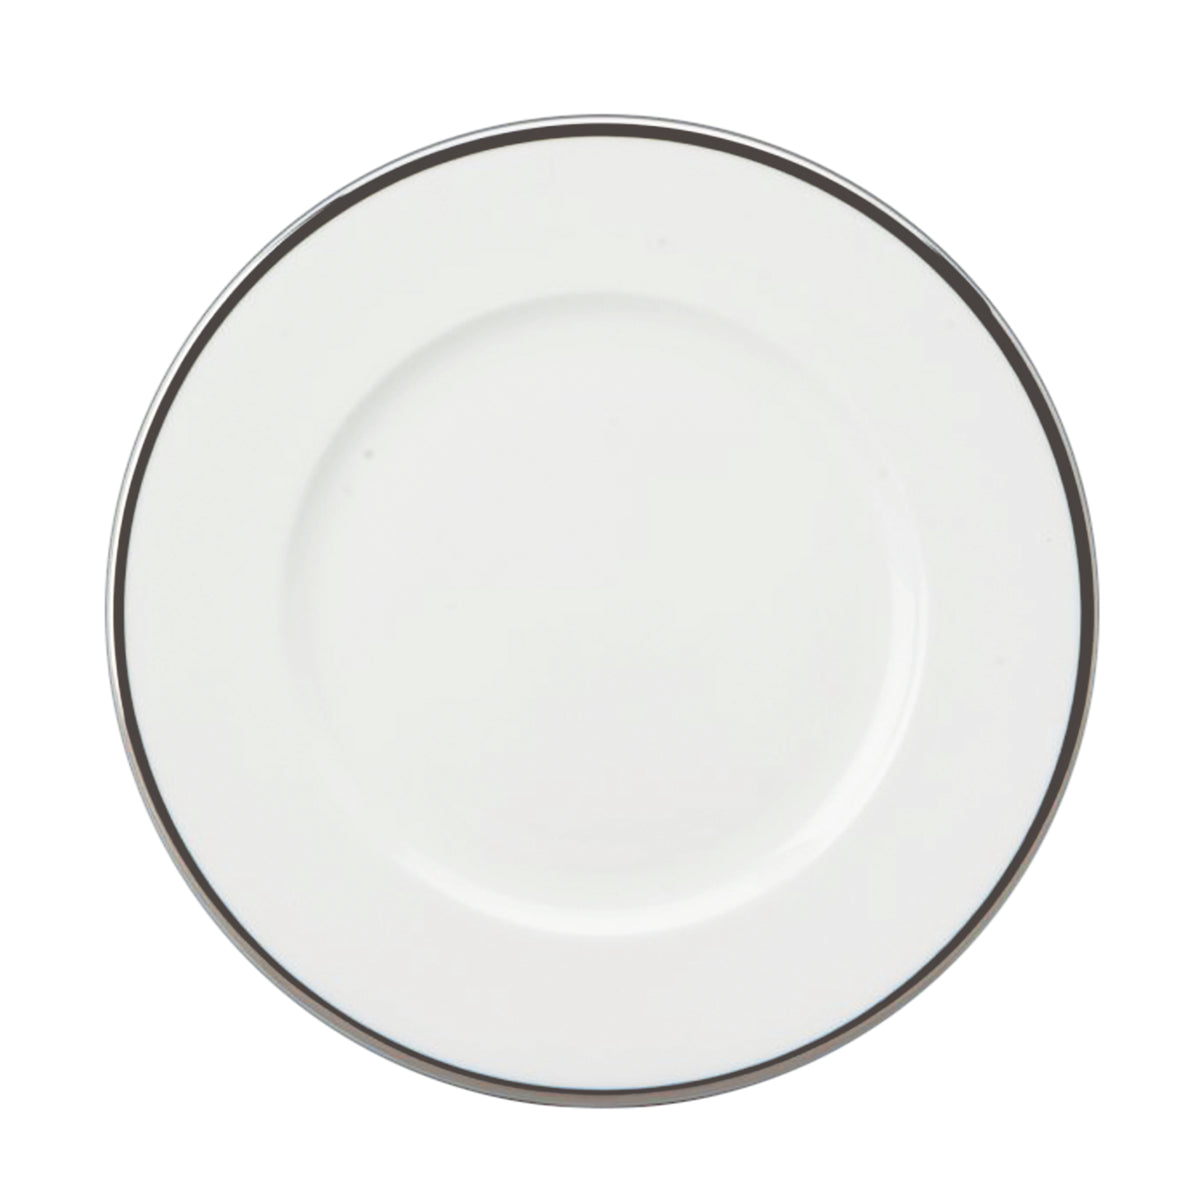 Comet - Dinner Plate